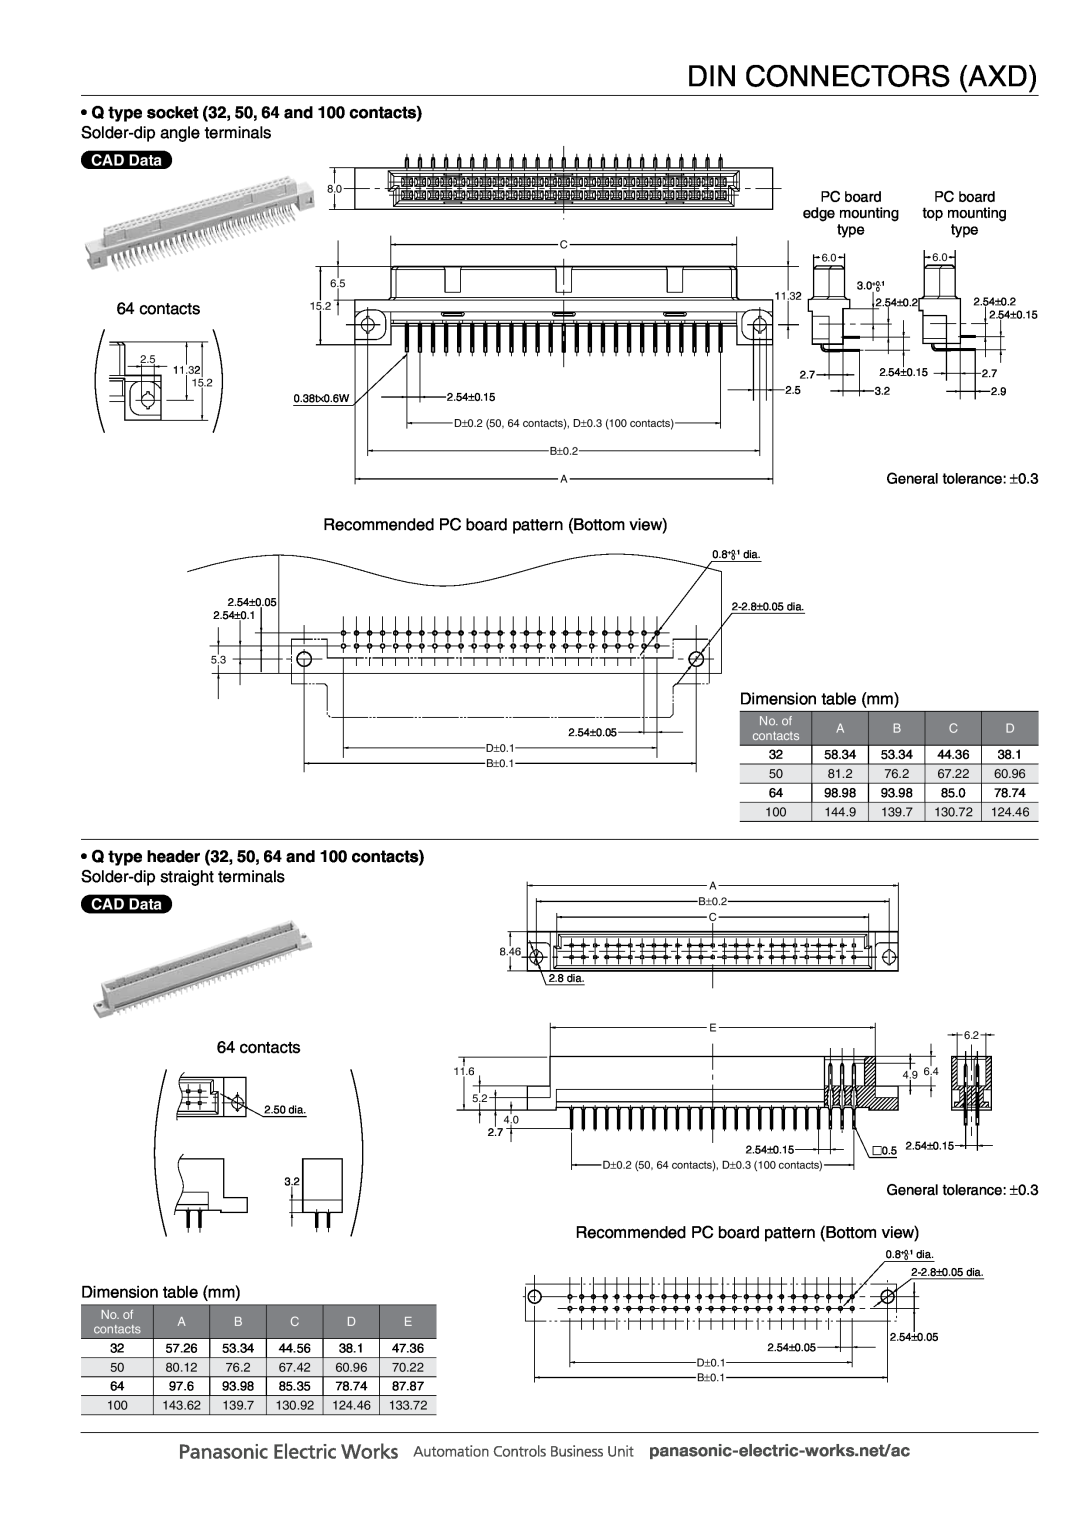 Panasonic DIN Connectors manual Q type socket 32, 50, 64 and 100 contacts Solder-dip angle terminals, Din Connectors Axd 